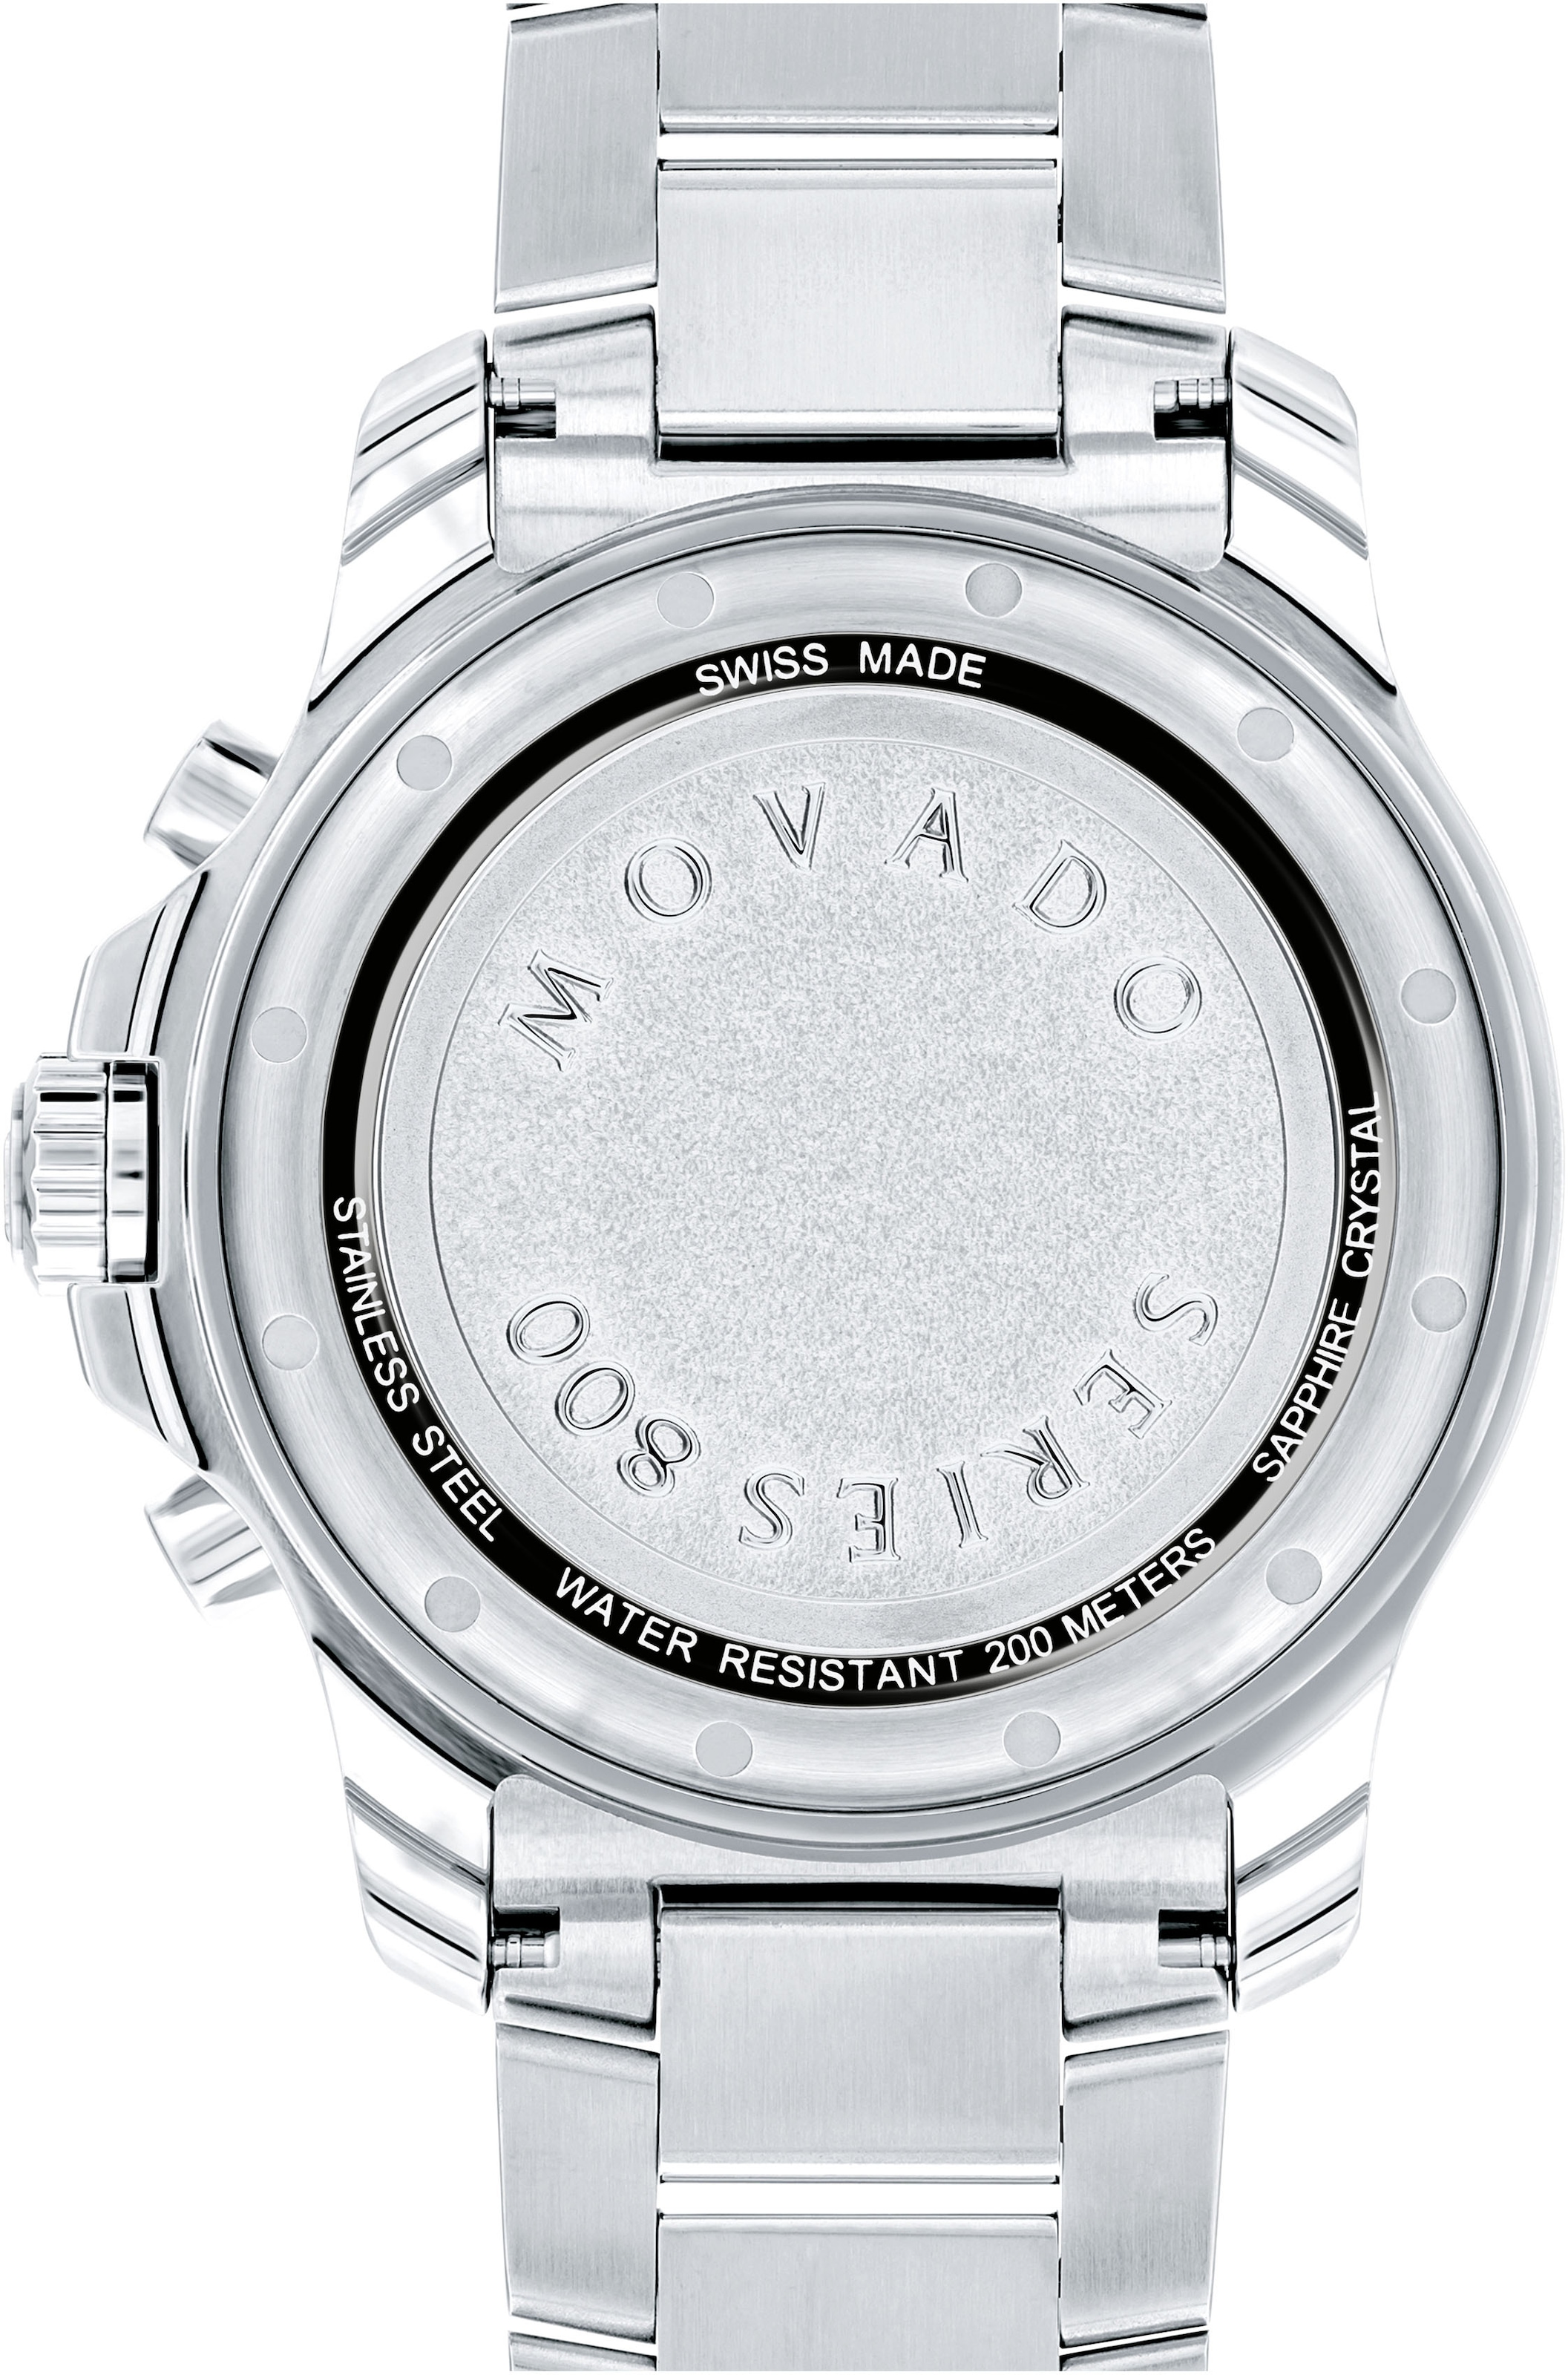 MOVADO Chronograph »Series Online-Shop 800, im 2600142« kaufen